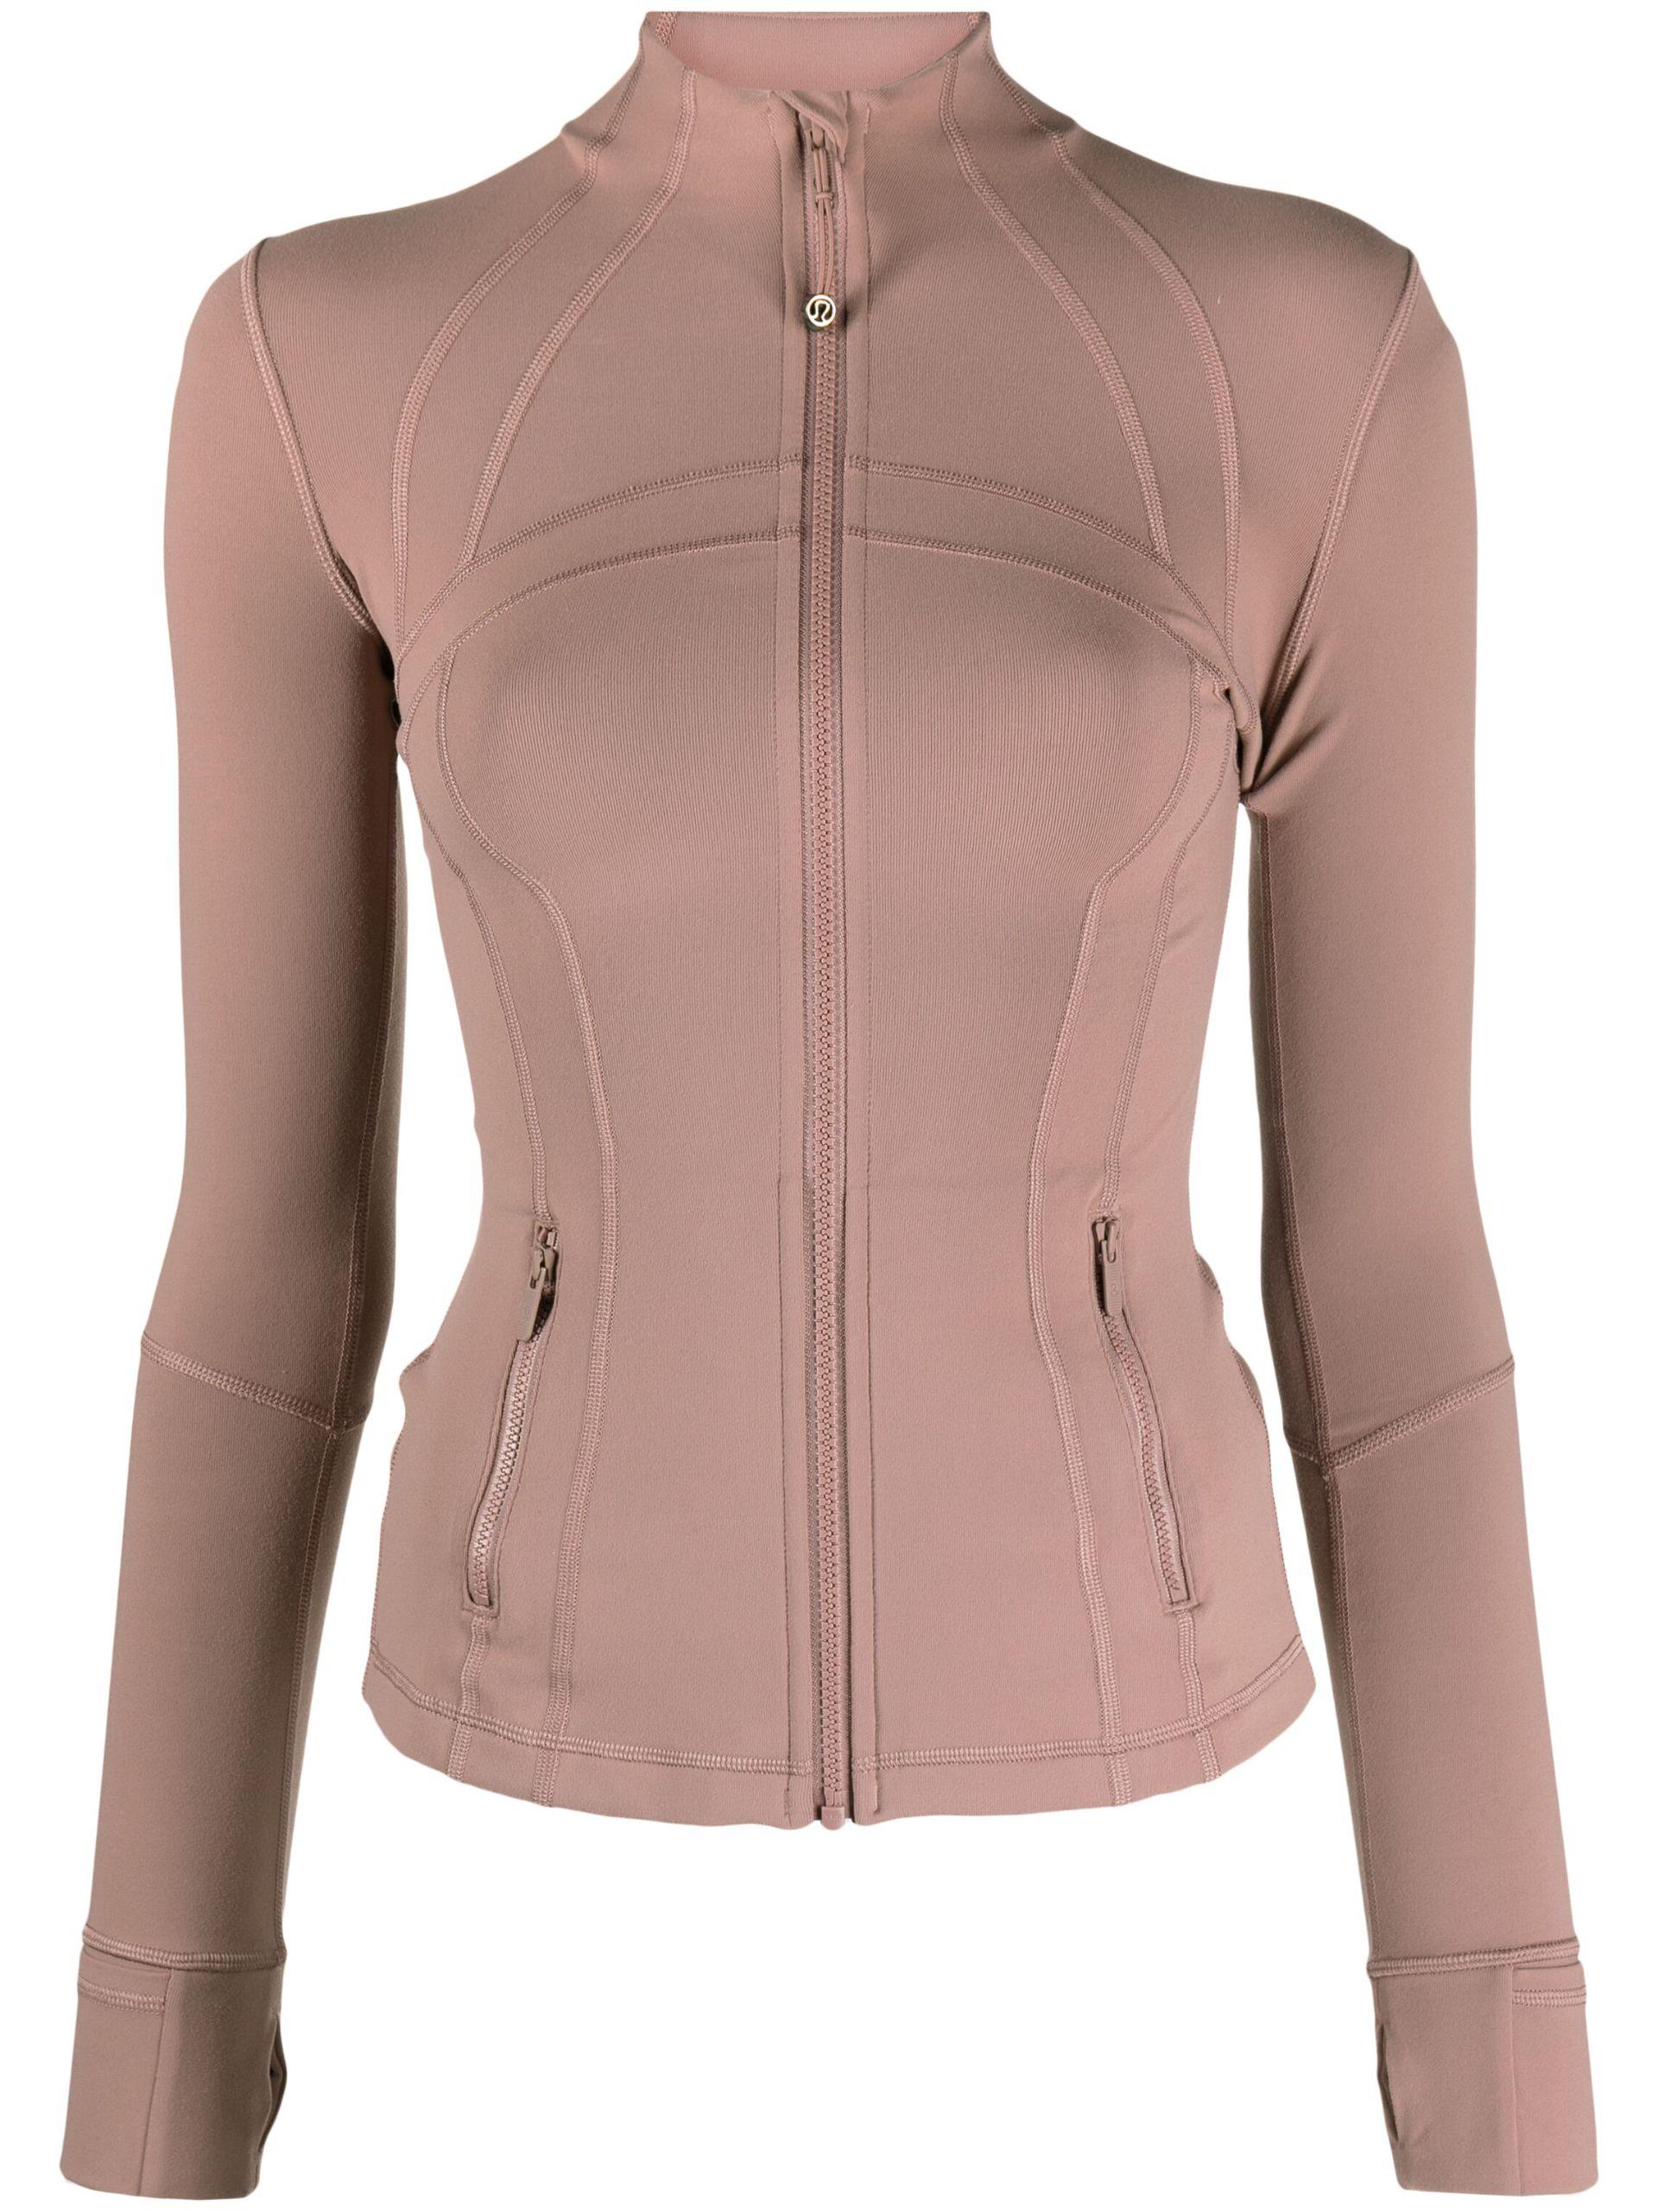 lululemon athletica Define Jacket - Women's - Nylon/lycra/elastane